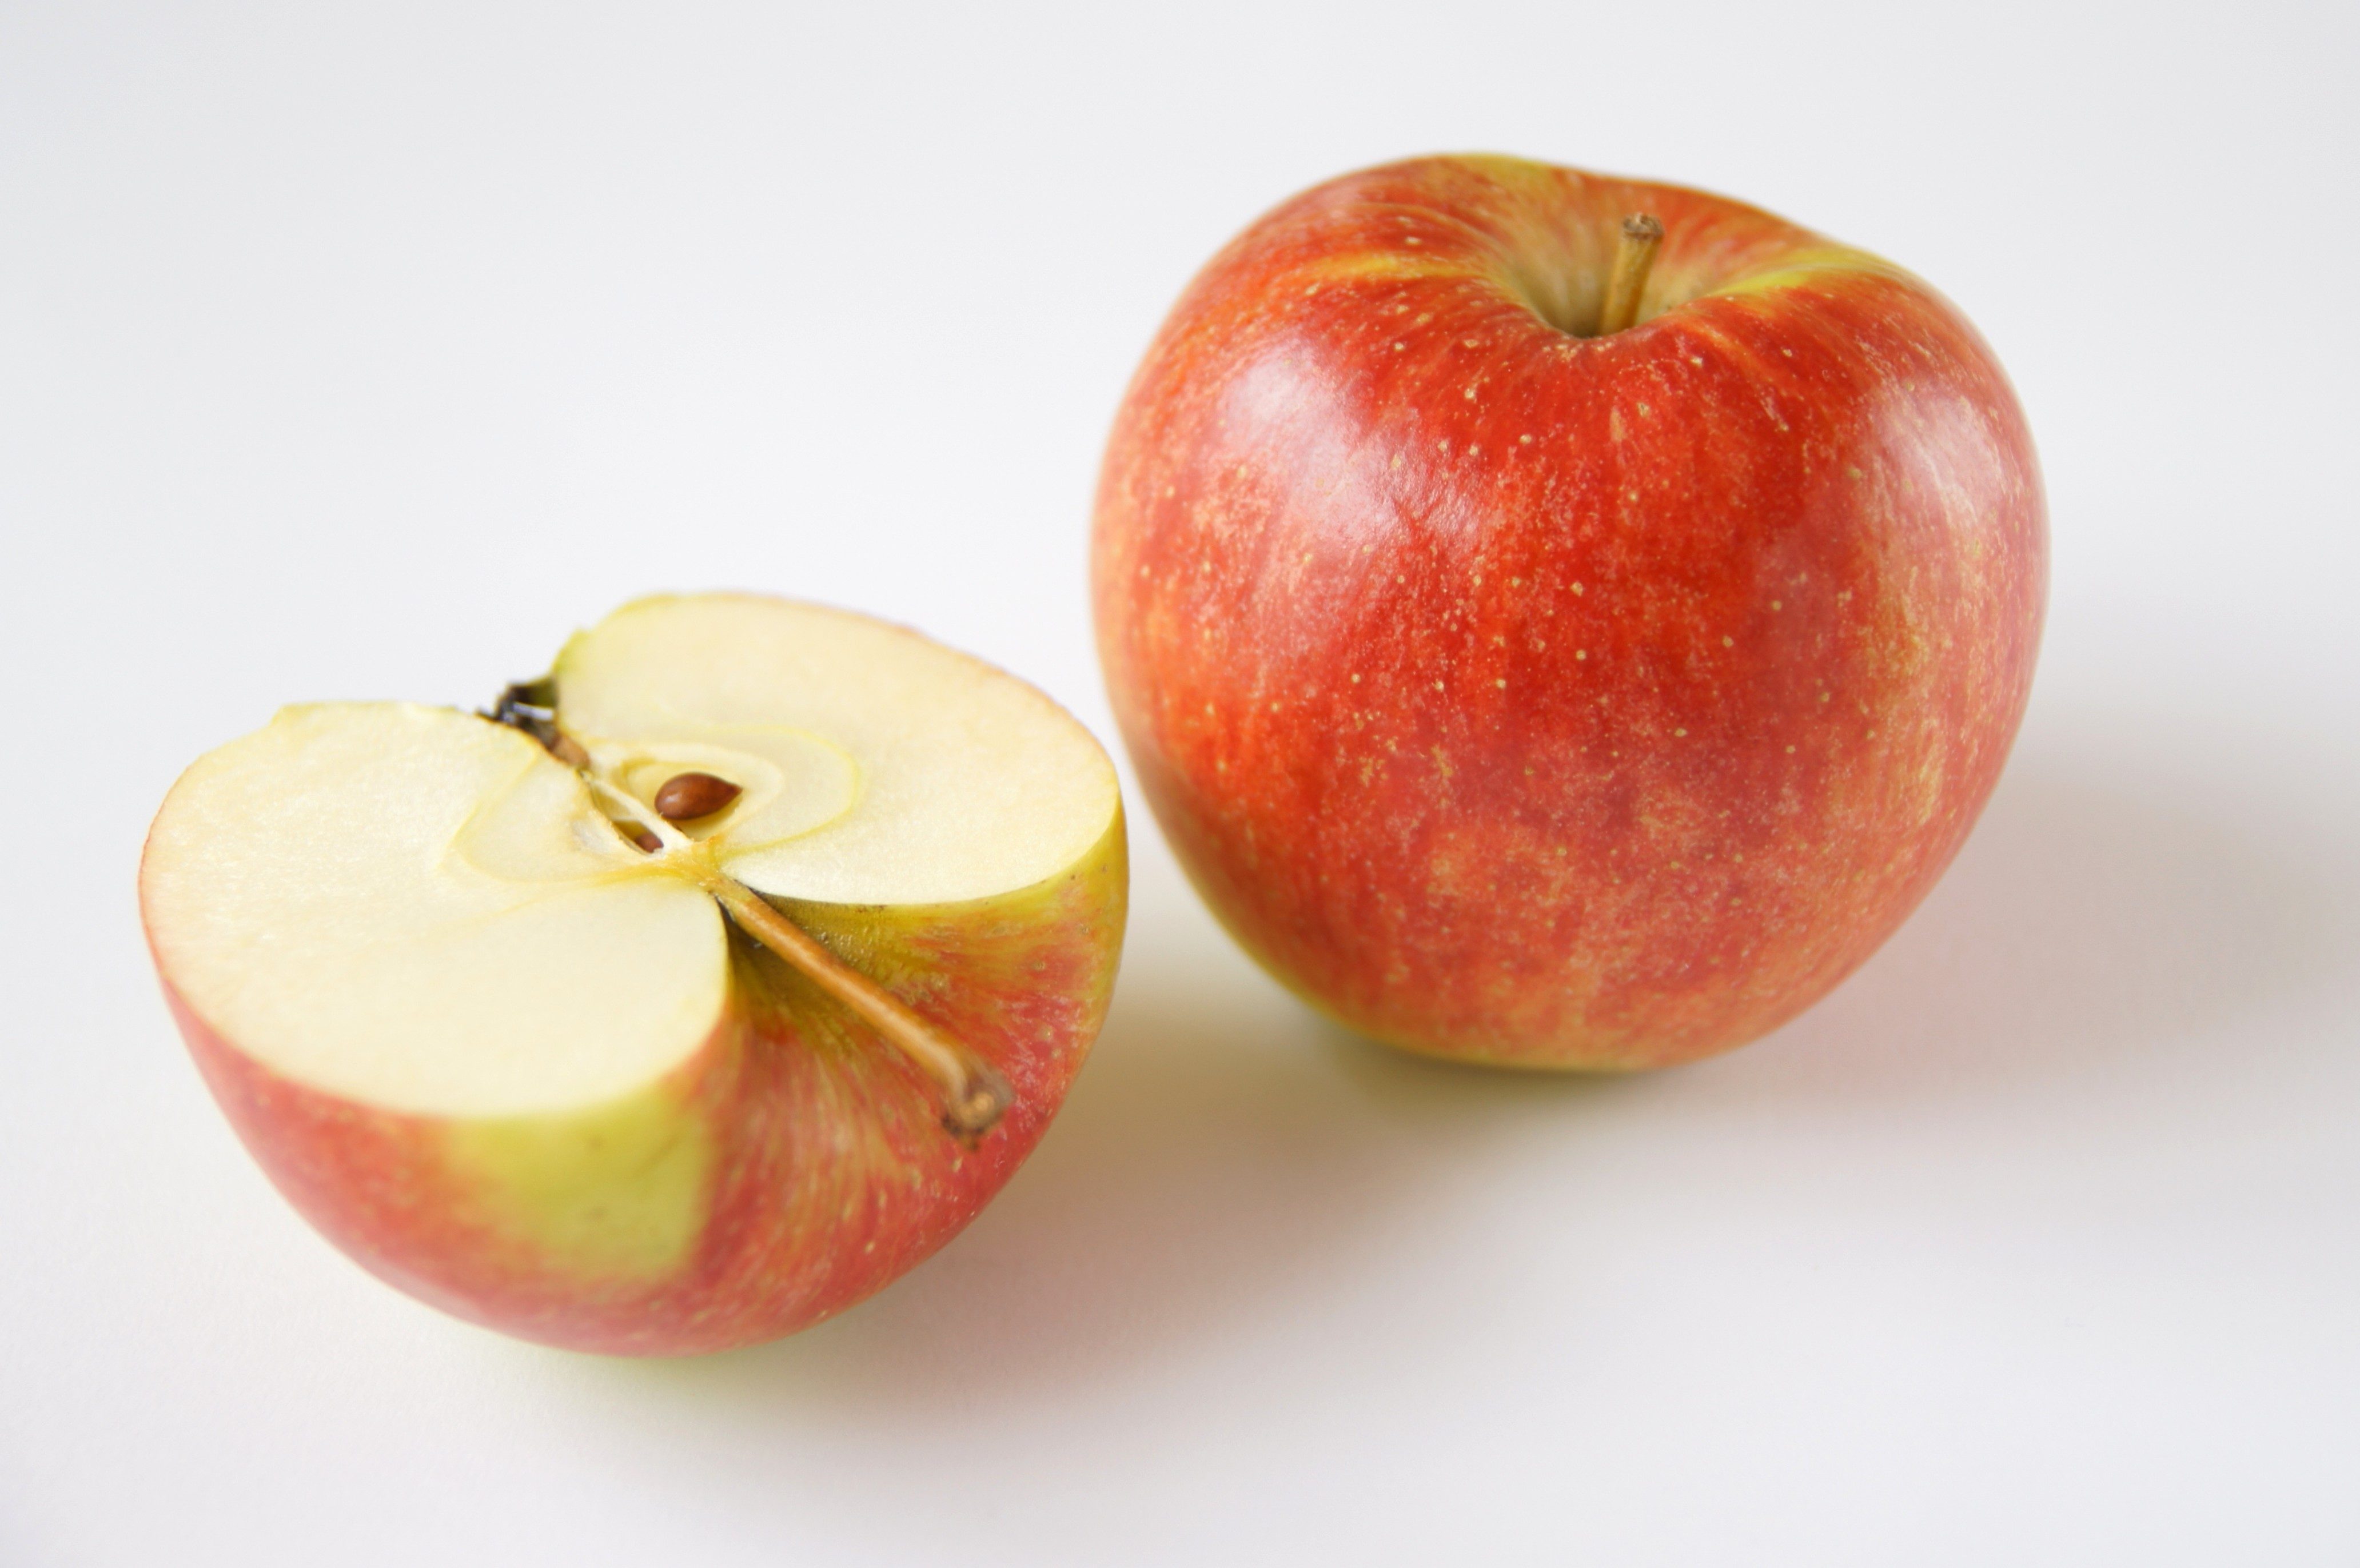 The apple am little. Половинка яблока. Яблоко пополам. Целое яблоко. Две половинки яблока.